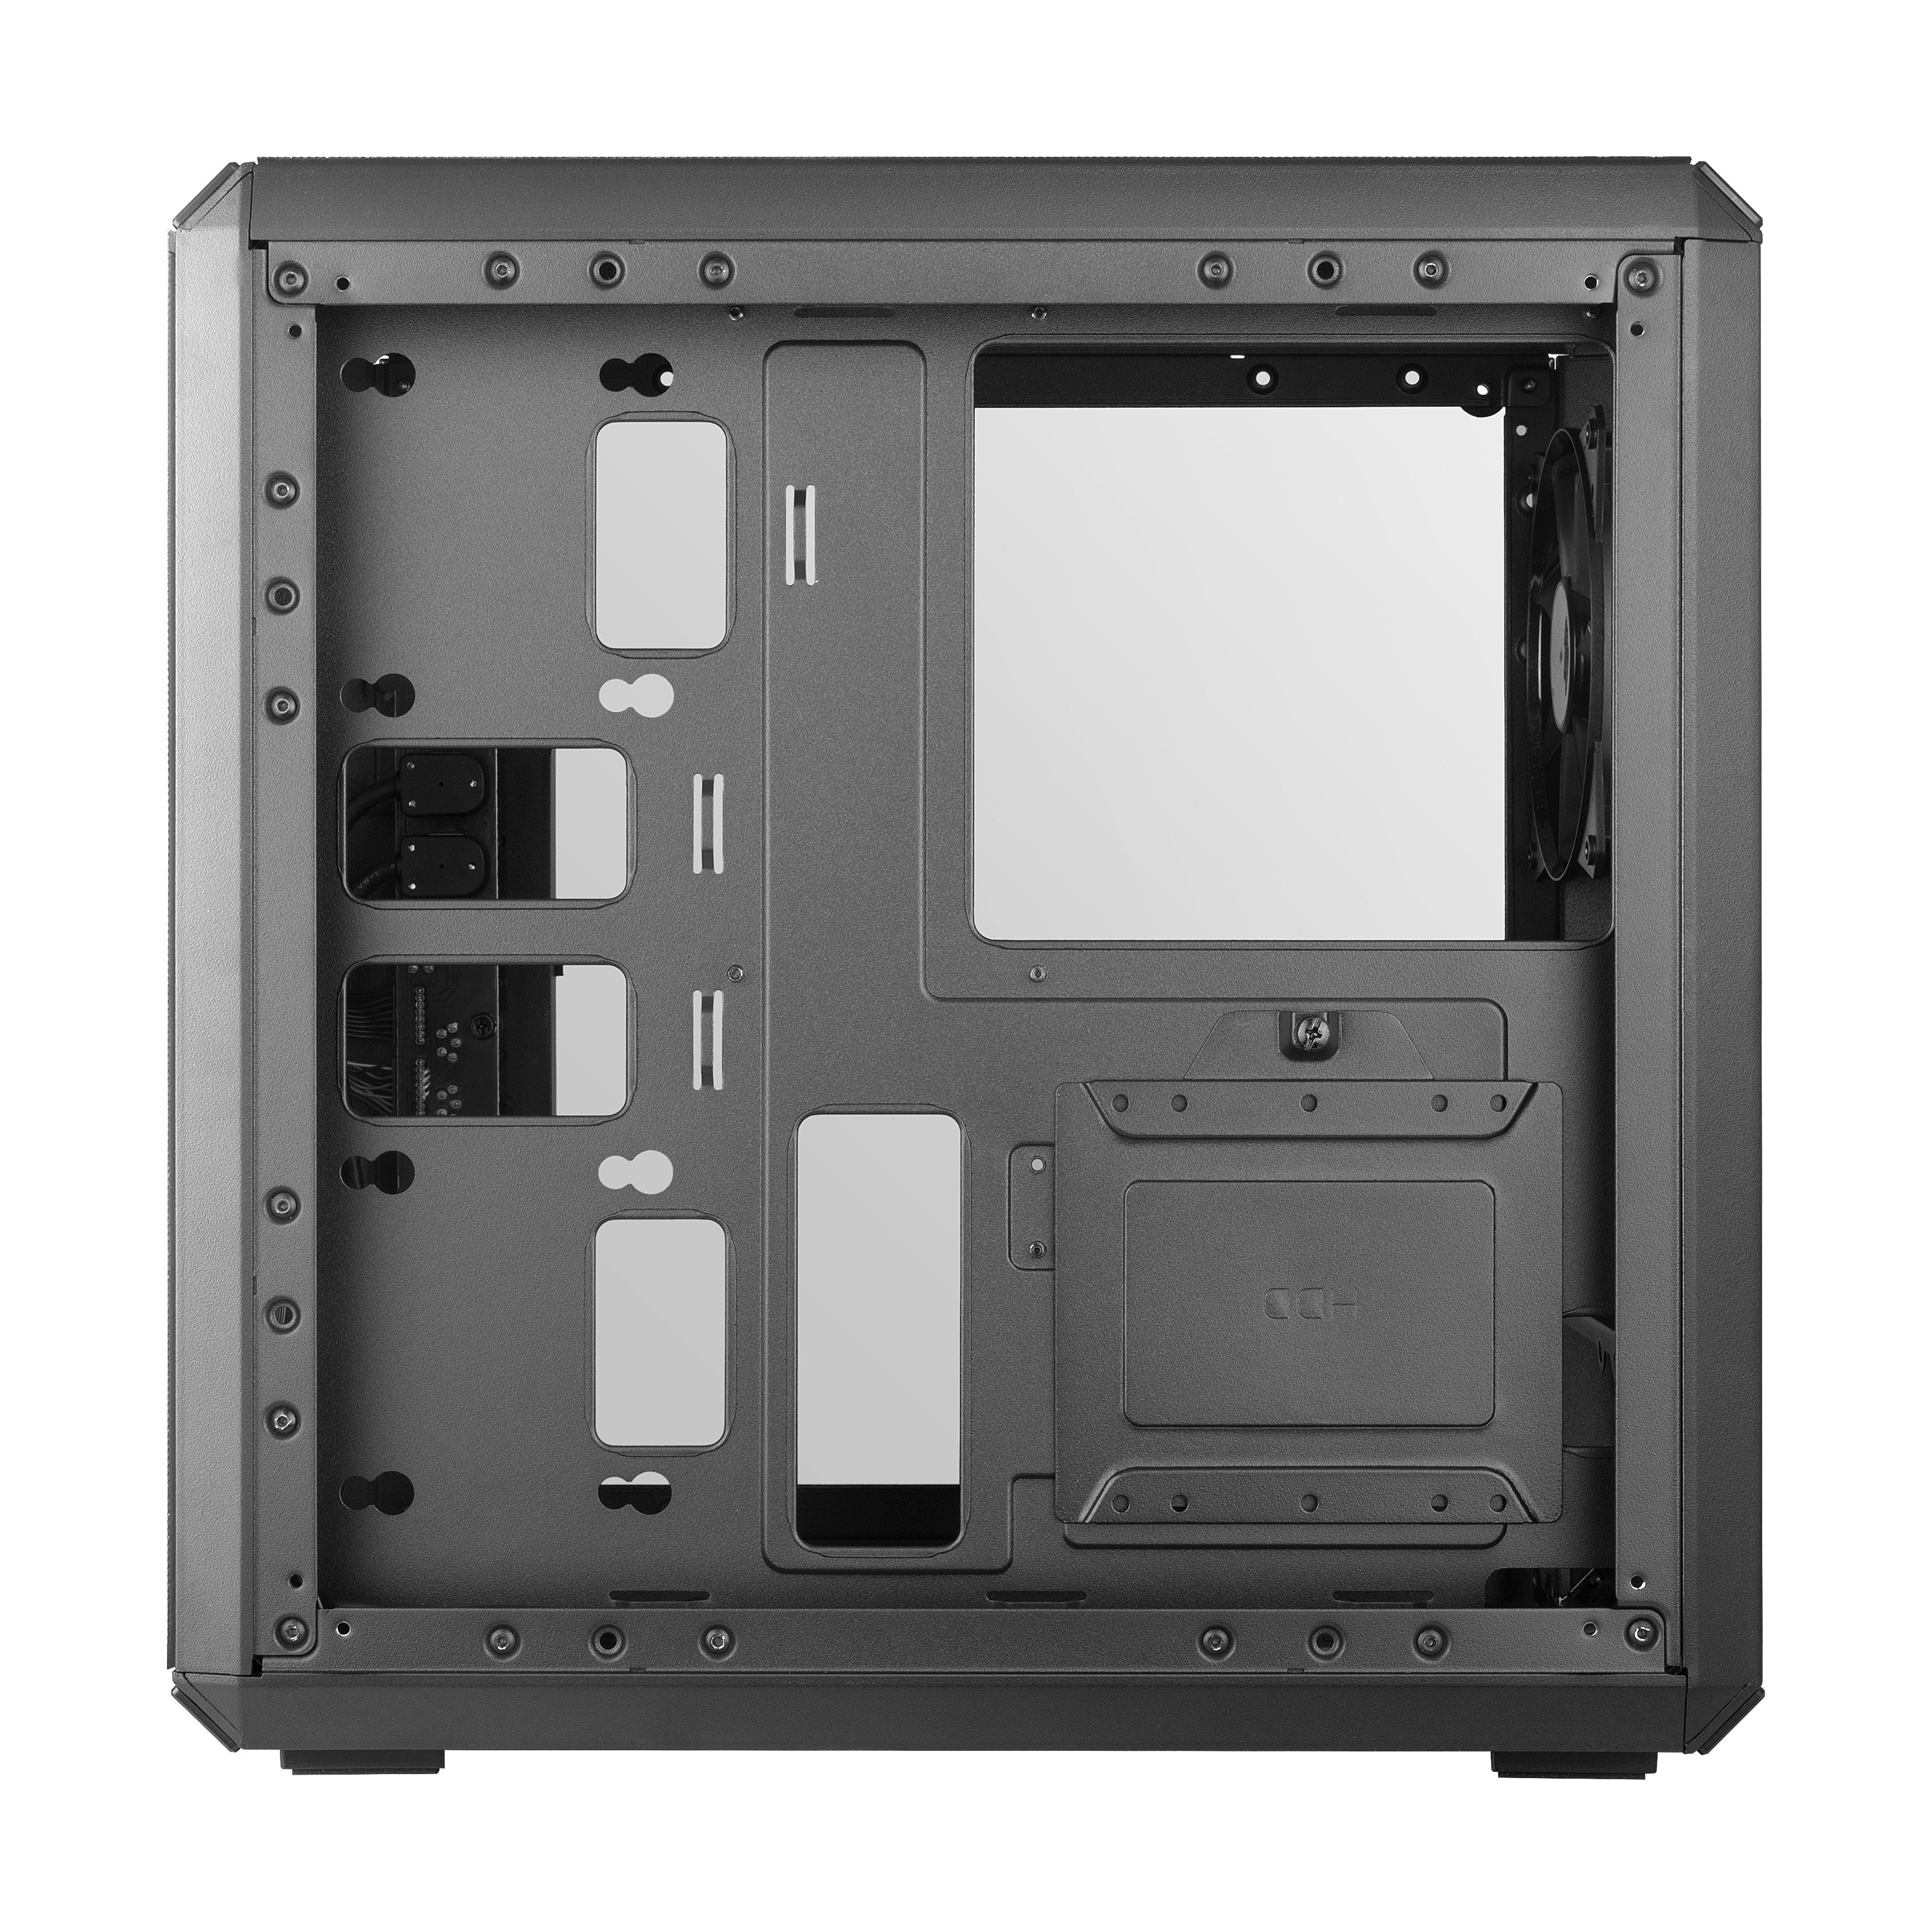 Cooler Master MasterBox Q300L Micro-ATX Case - Black Window